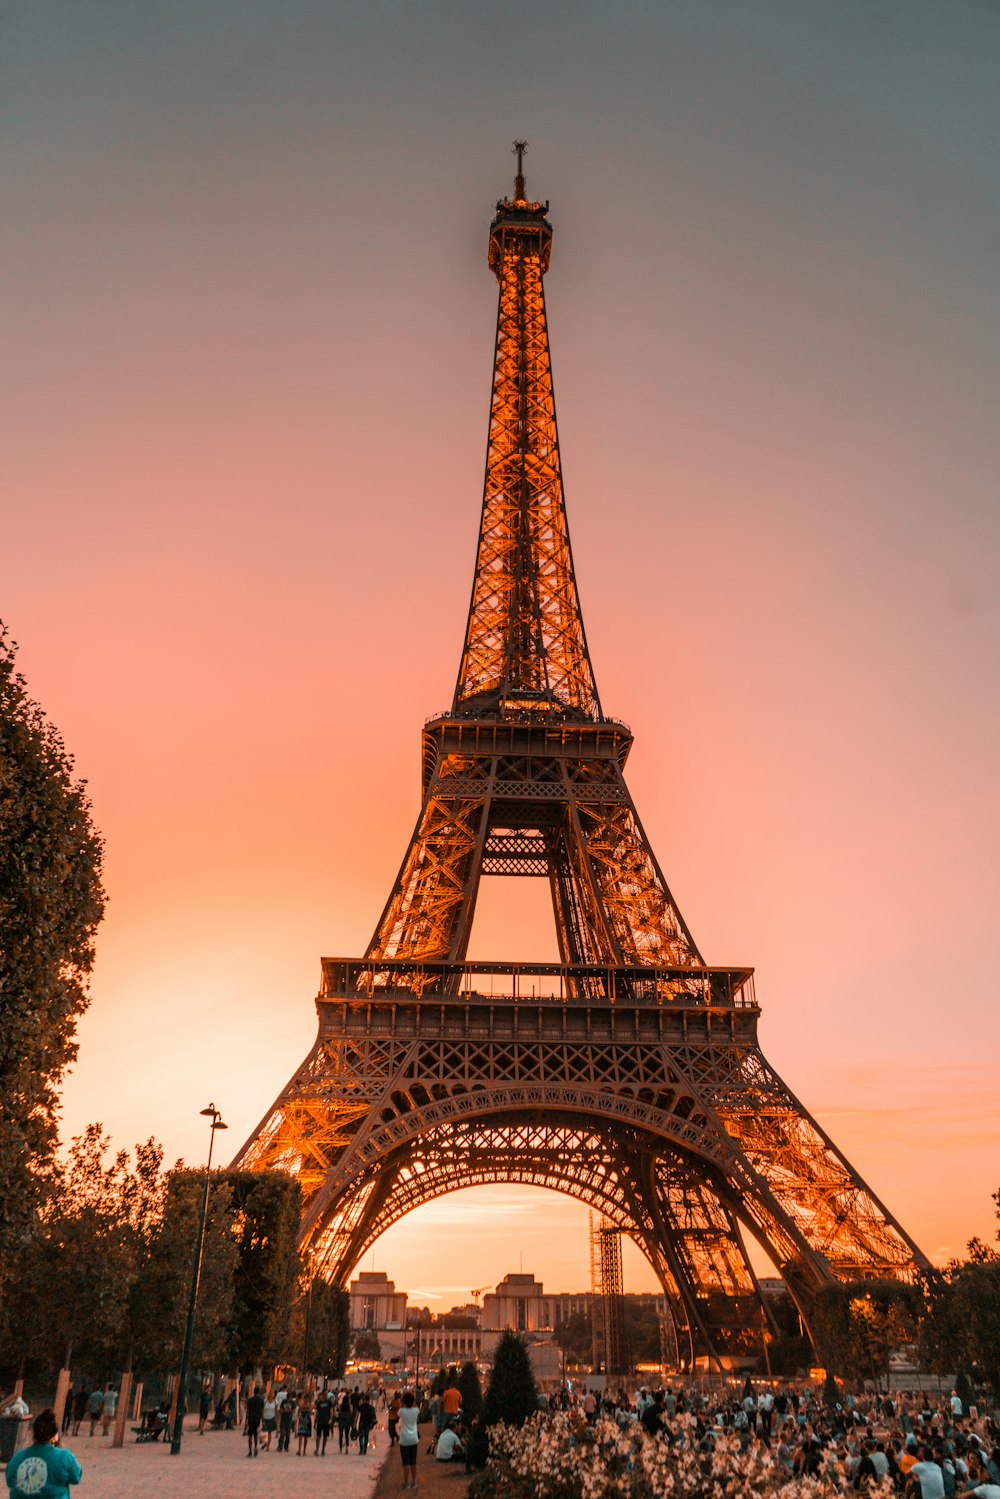 Eiffel Tower, Paris France photo – Free Architecture Image on Unsplash